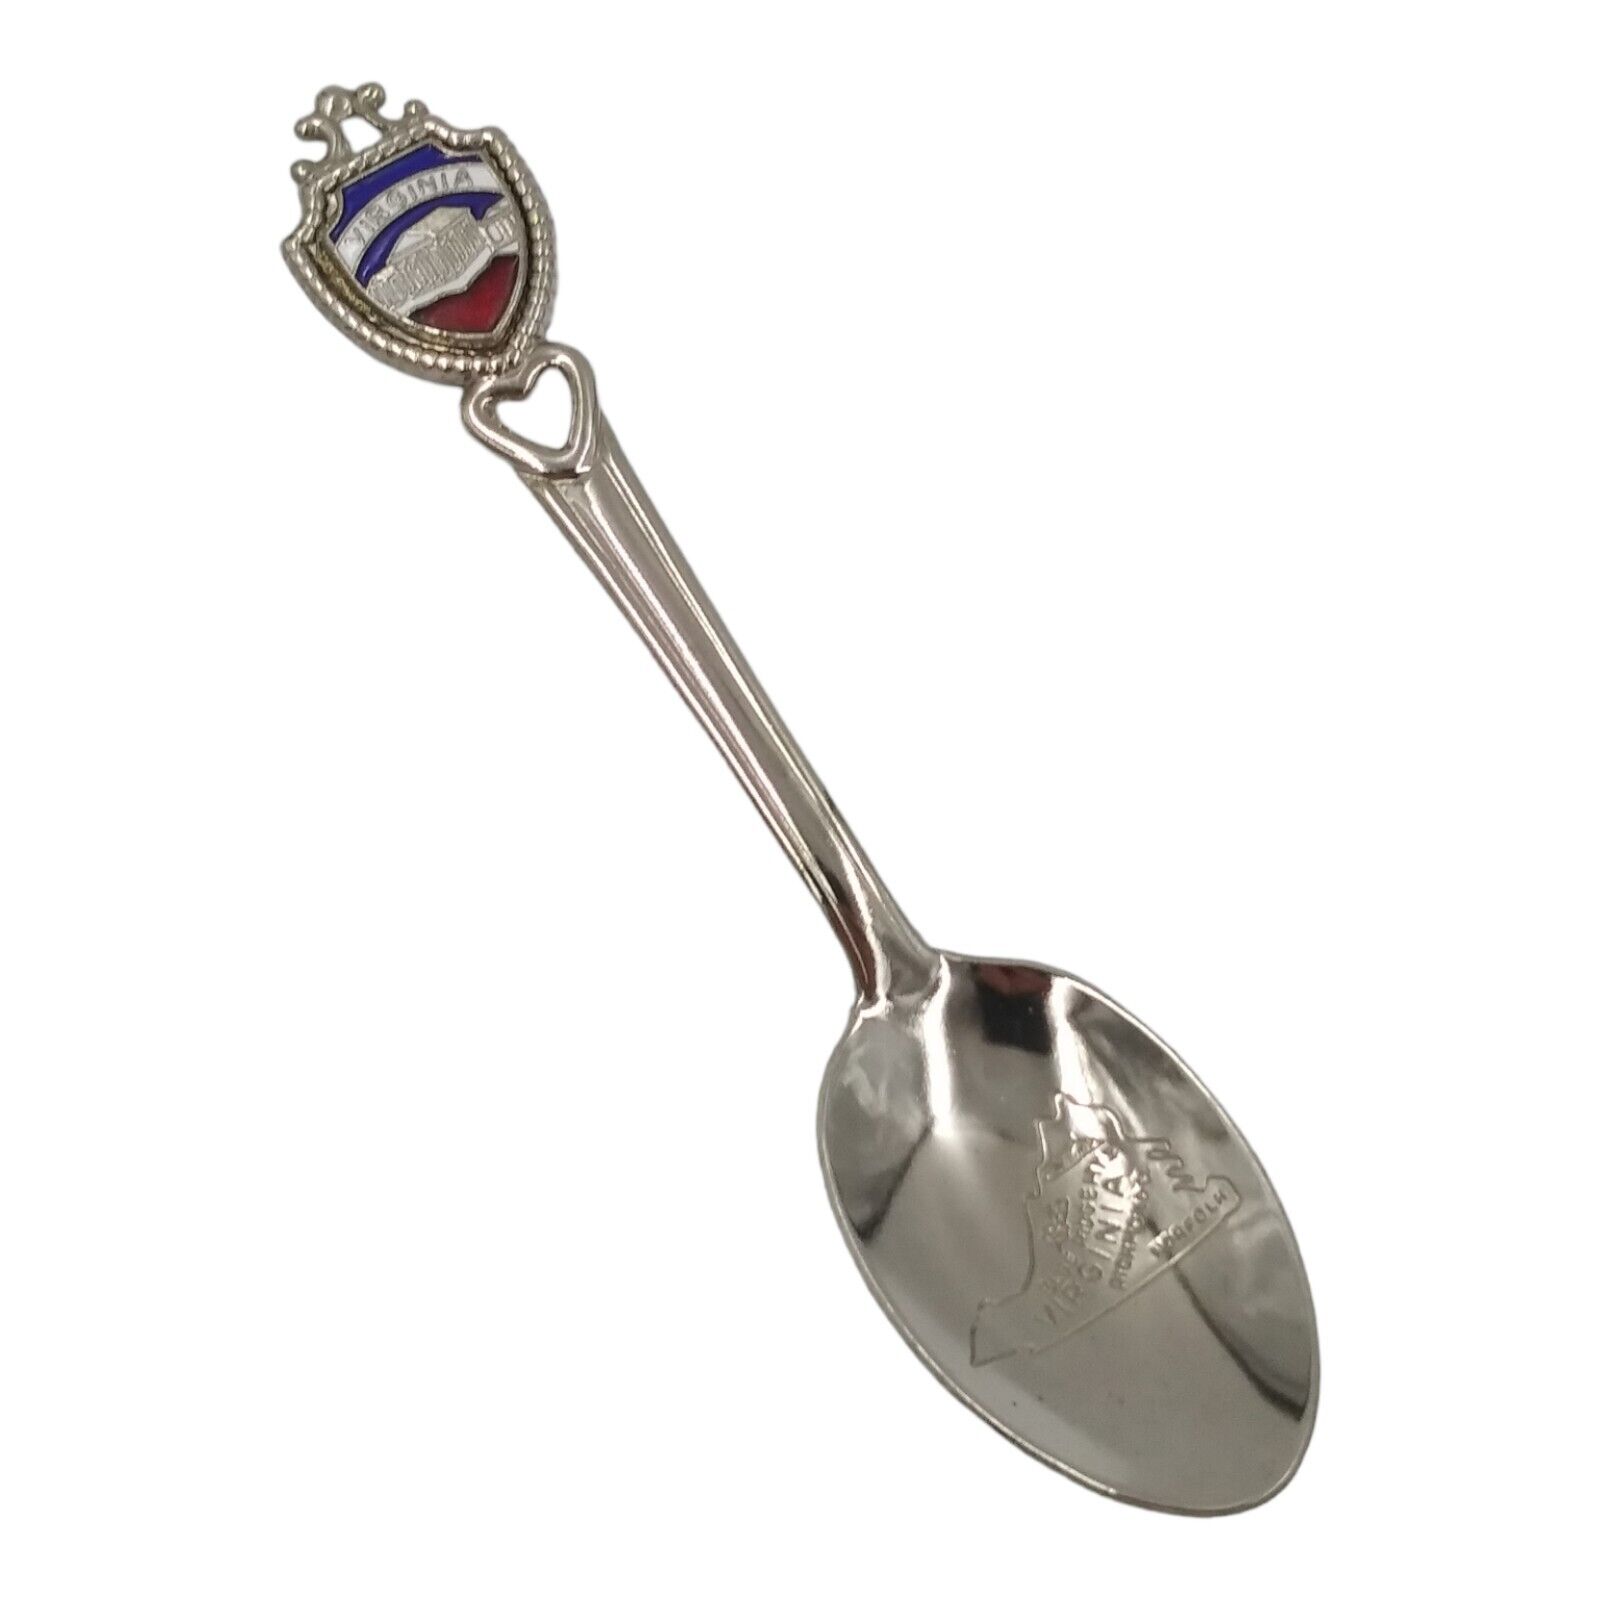 Vintage Virginia Souvenir Spoon US Collectible State Capitol